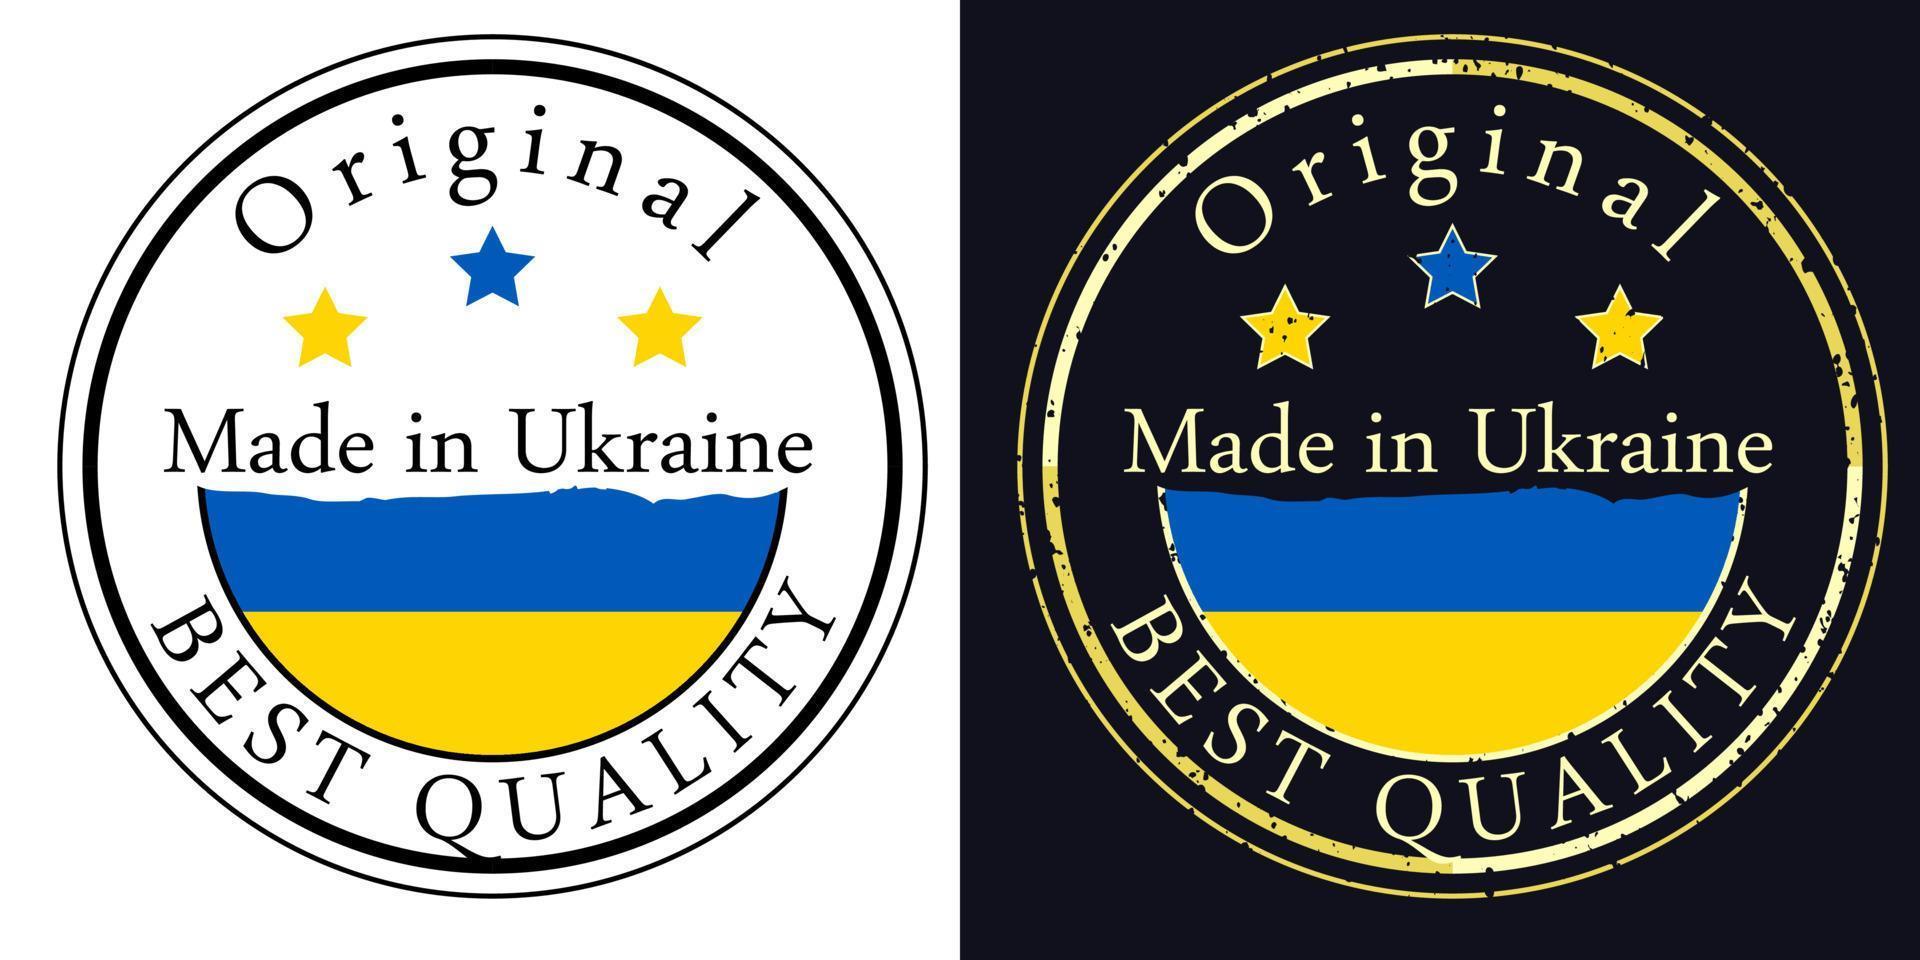 Made in Ukraine vector stamp. Round labels with Ukraine flag, original best quality.